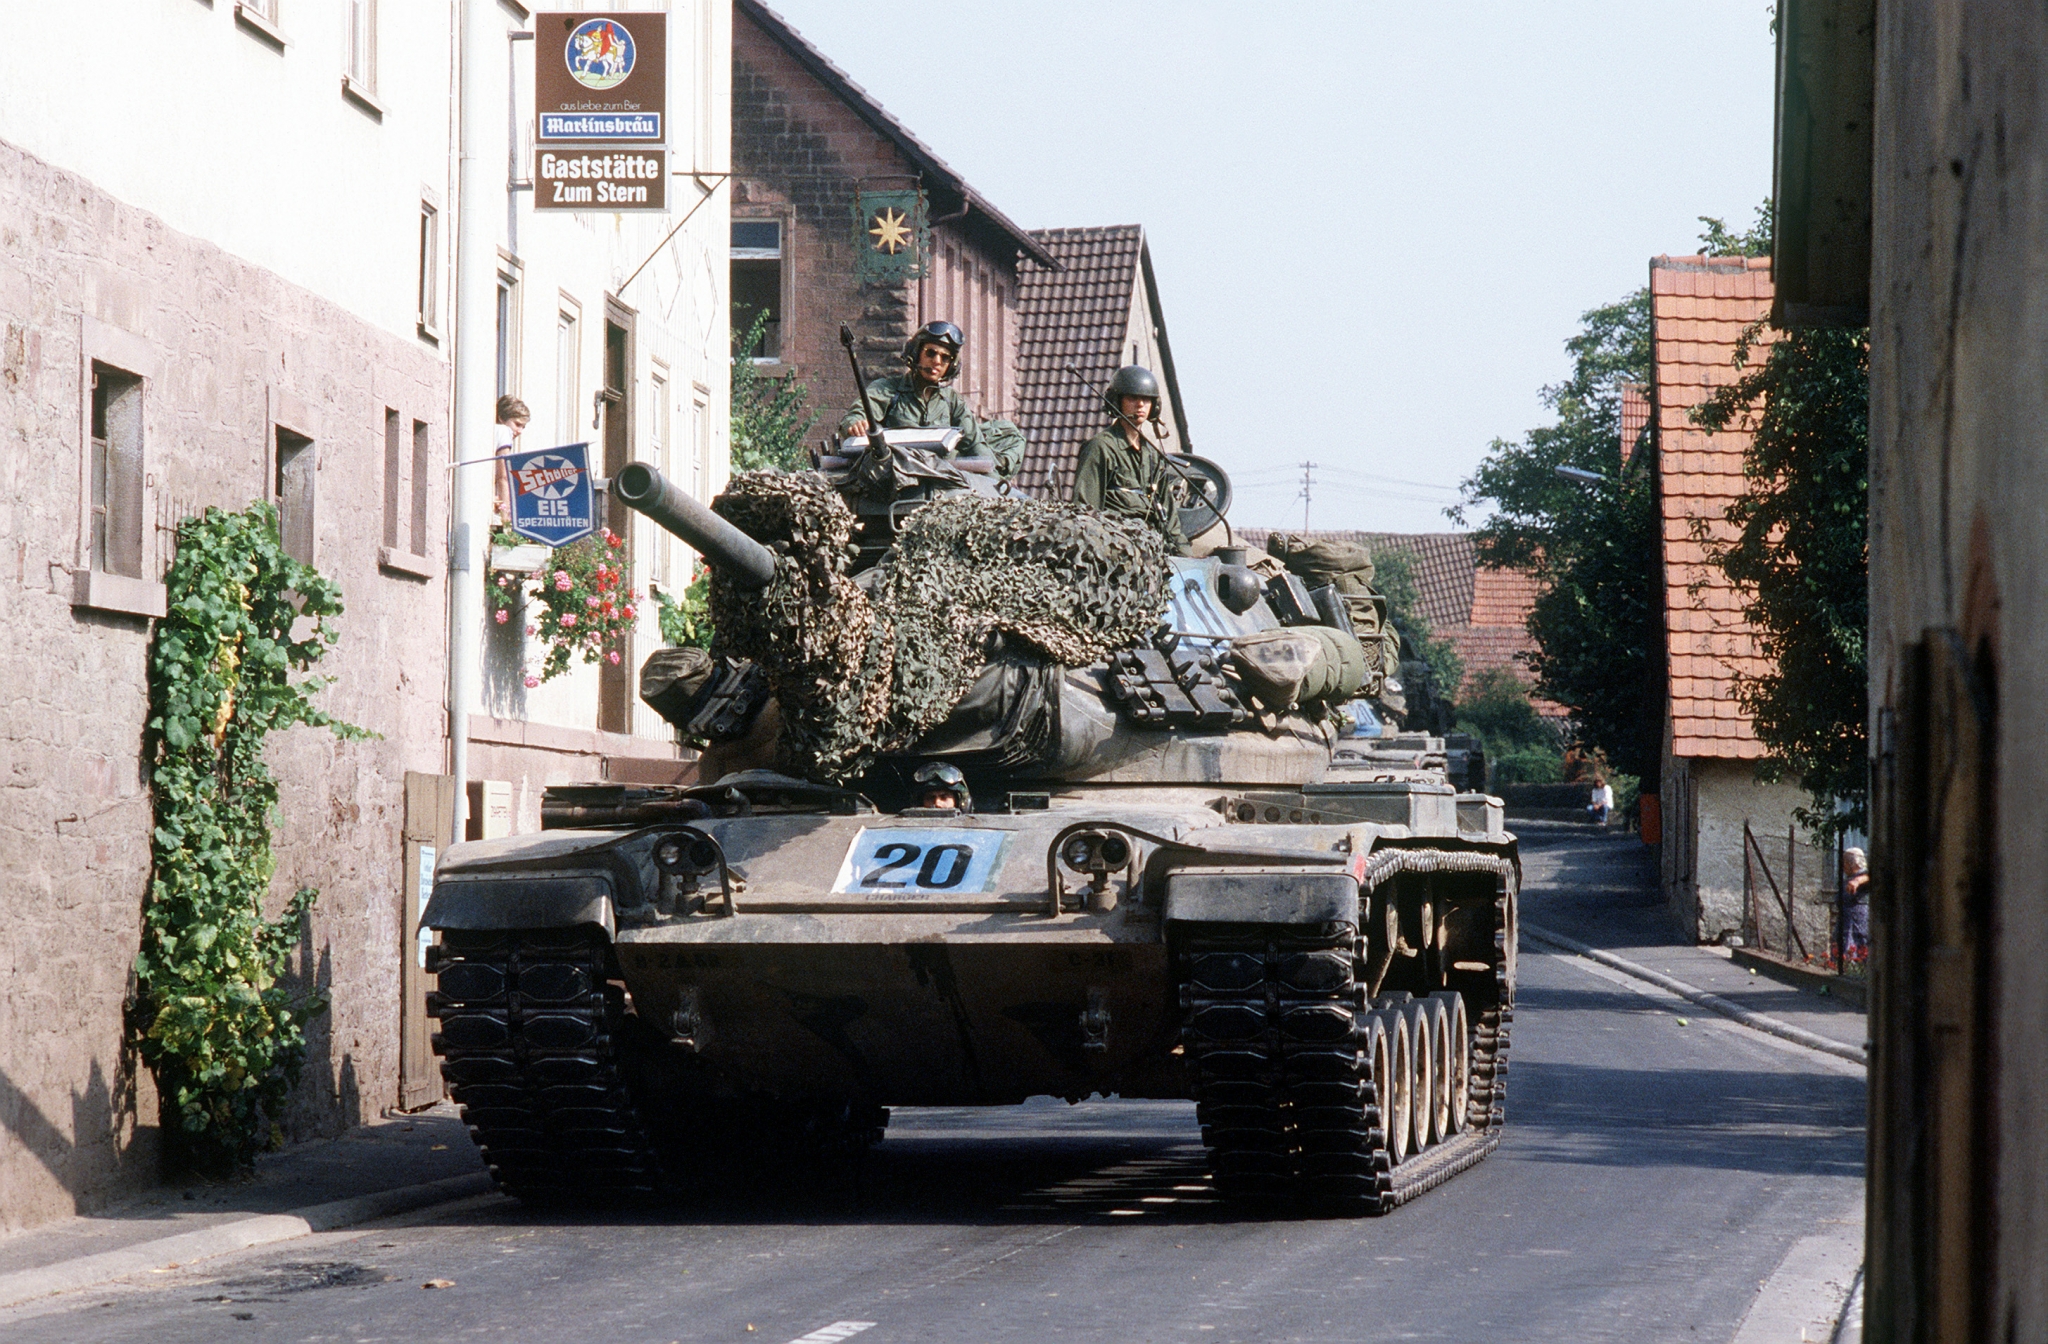 M60 Patton Years active: 1961 - present